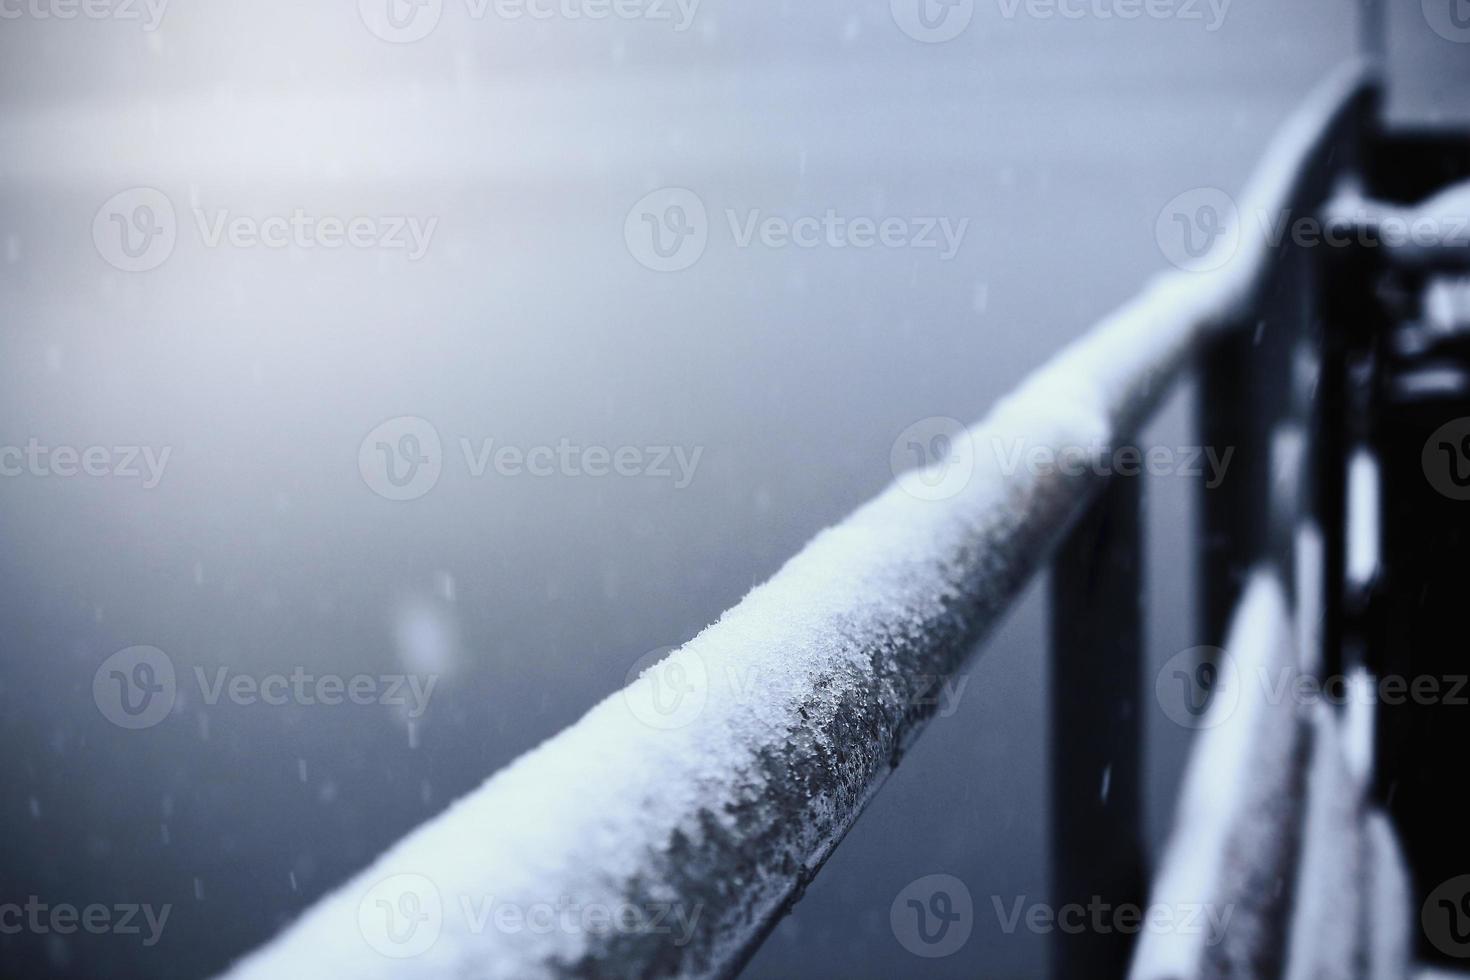 metall ledstång i snö med fallande snöflingor foto